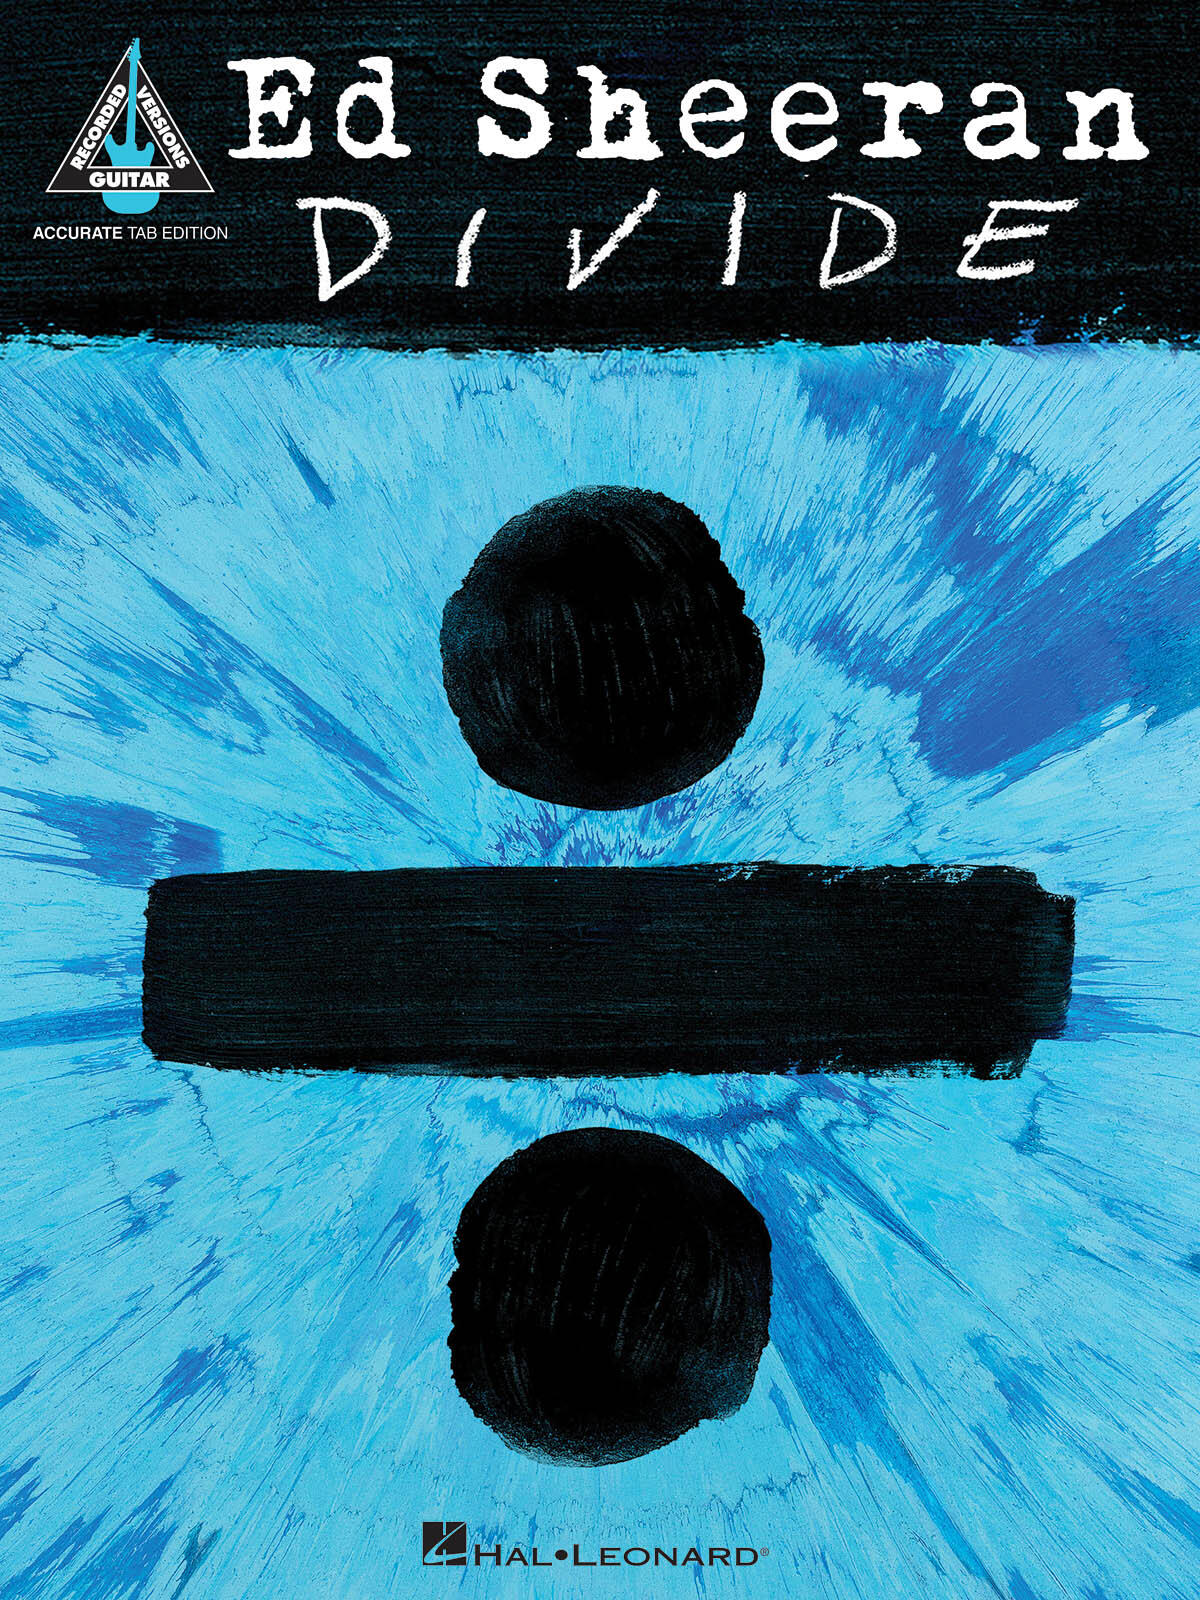 Ed Sheeran - Divide Guitar Accurate TAB Edition : photo 1